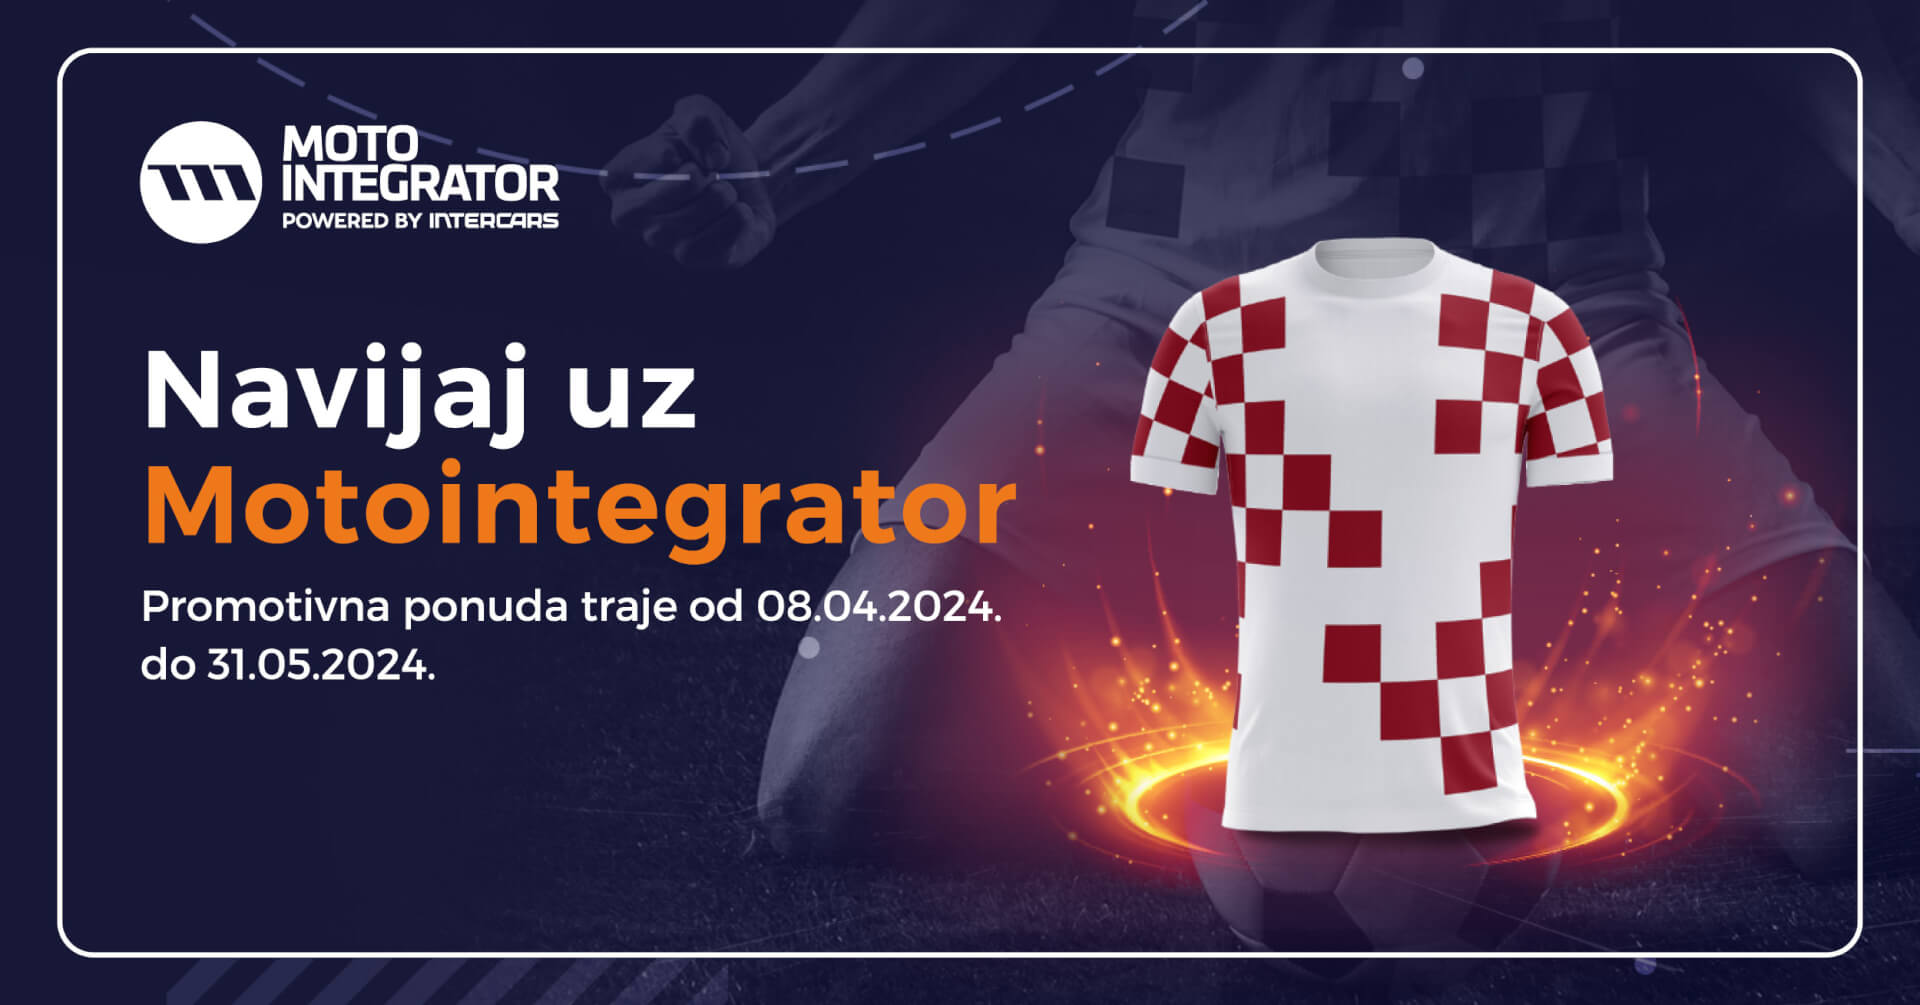 Navijaj uz Motointegrator i osvoji originalni dres Hrvatske nogometne reprezentacije